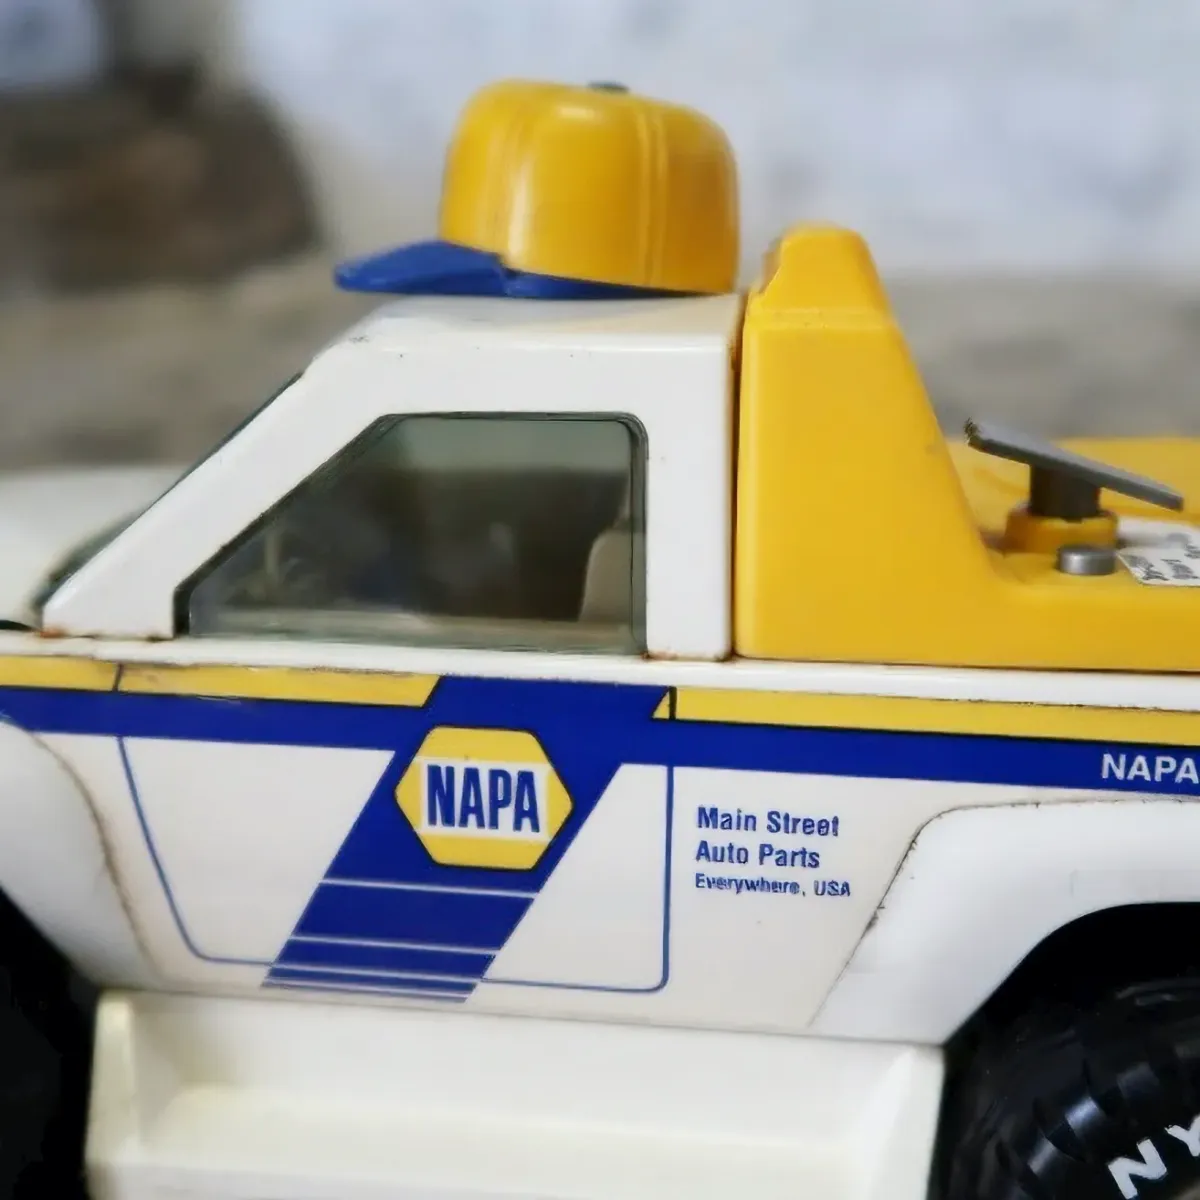 NYLINT社製 NAPA トラック ミニカー